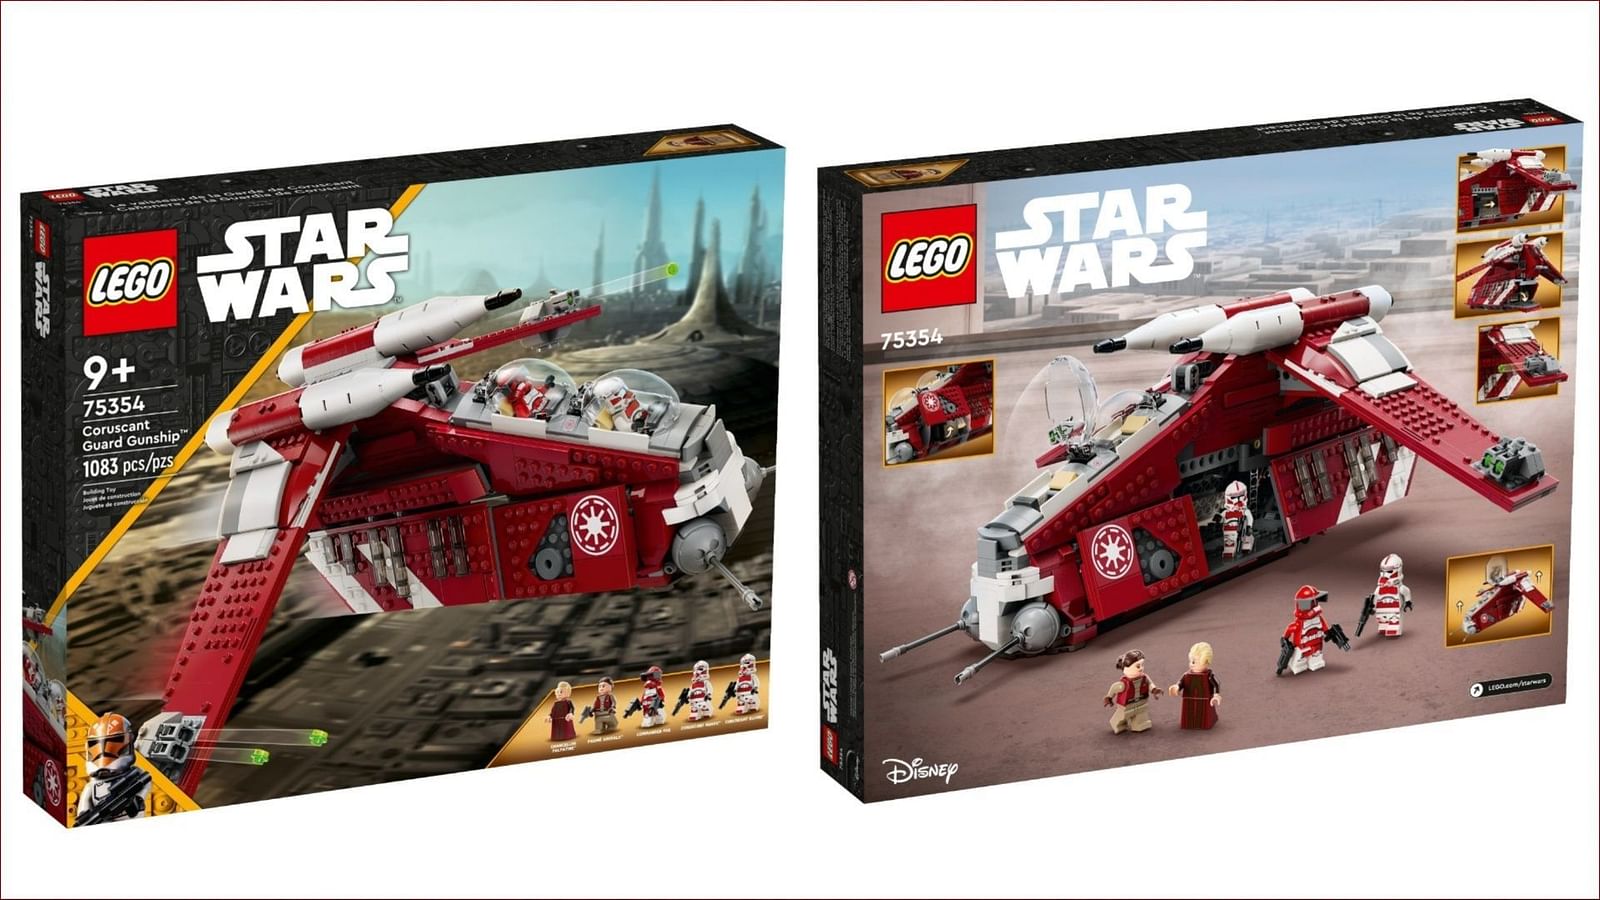 LEGO Star Wars Coruscant Guard Gunship Release date, price, featured